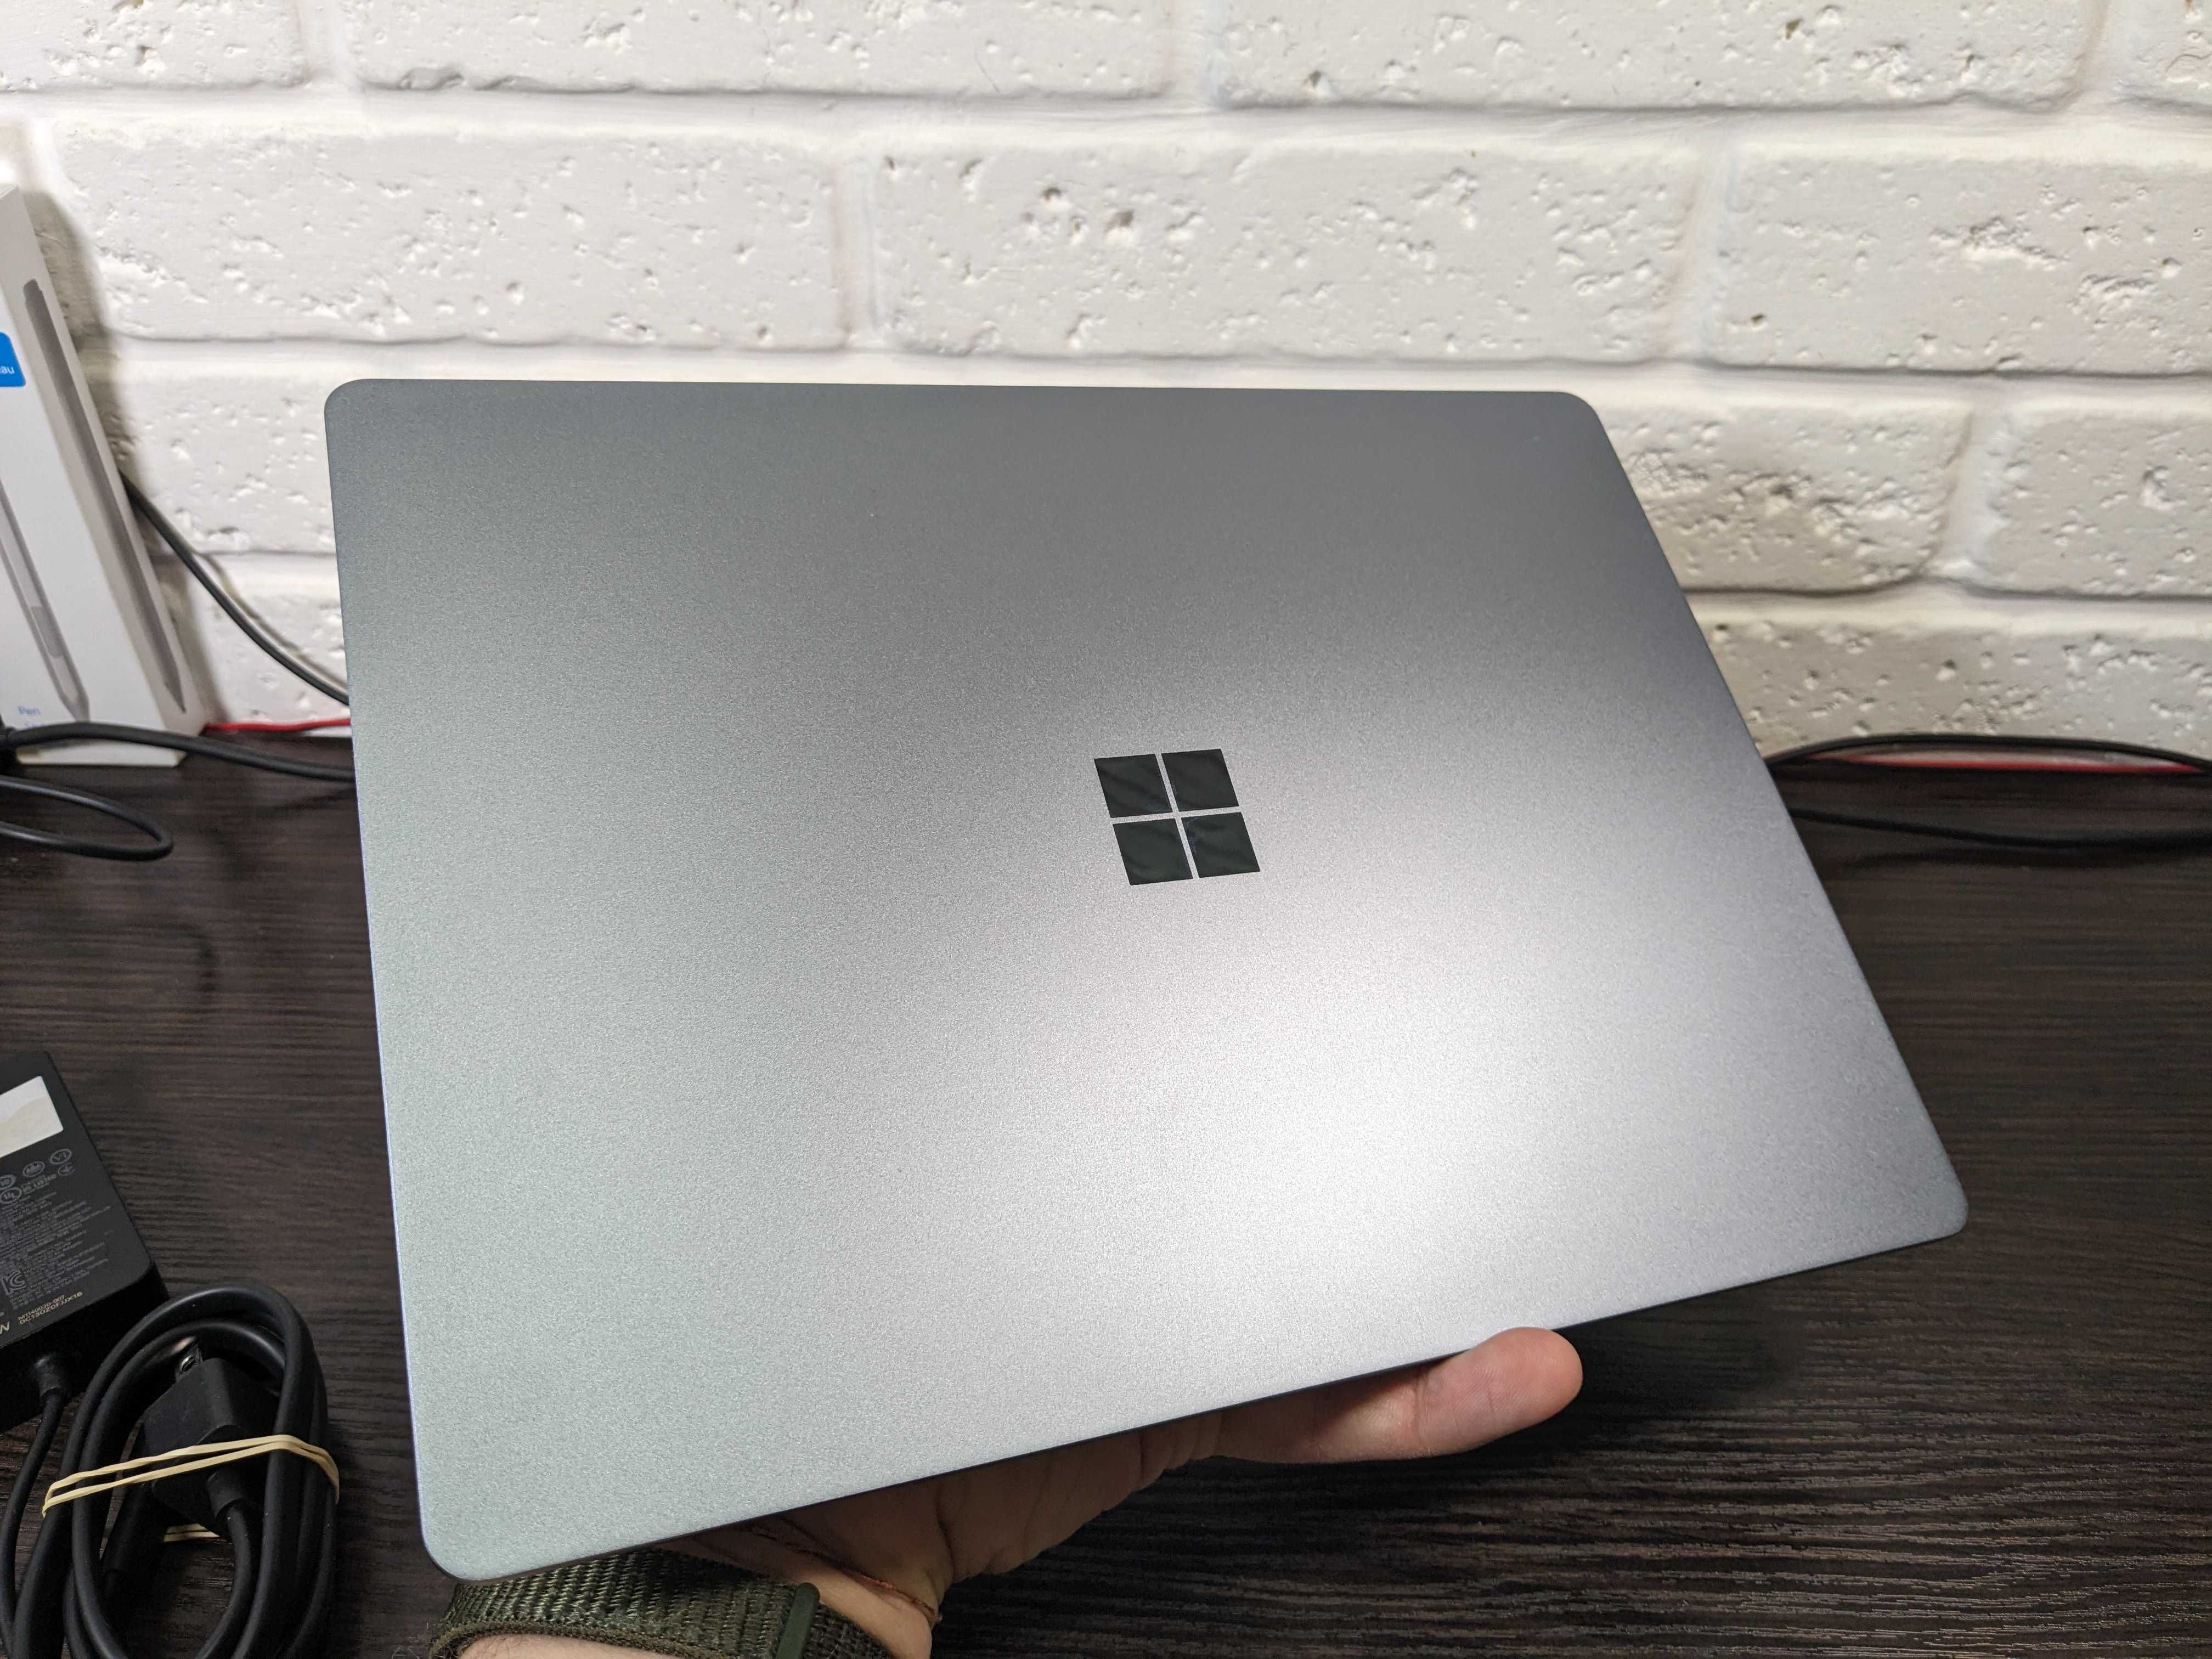 Microsoft Surface Laptop Go - 12.4" - Core i5-1035G7/8gb/256gb